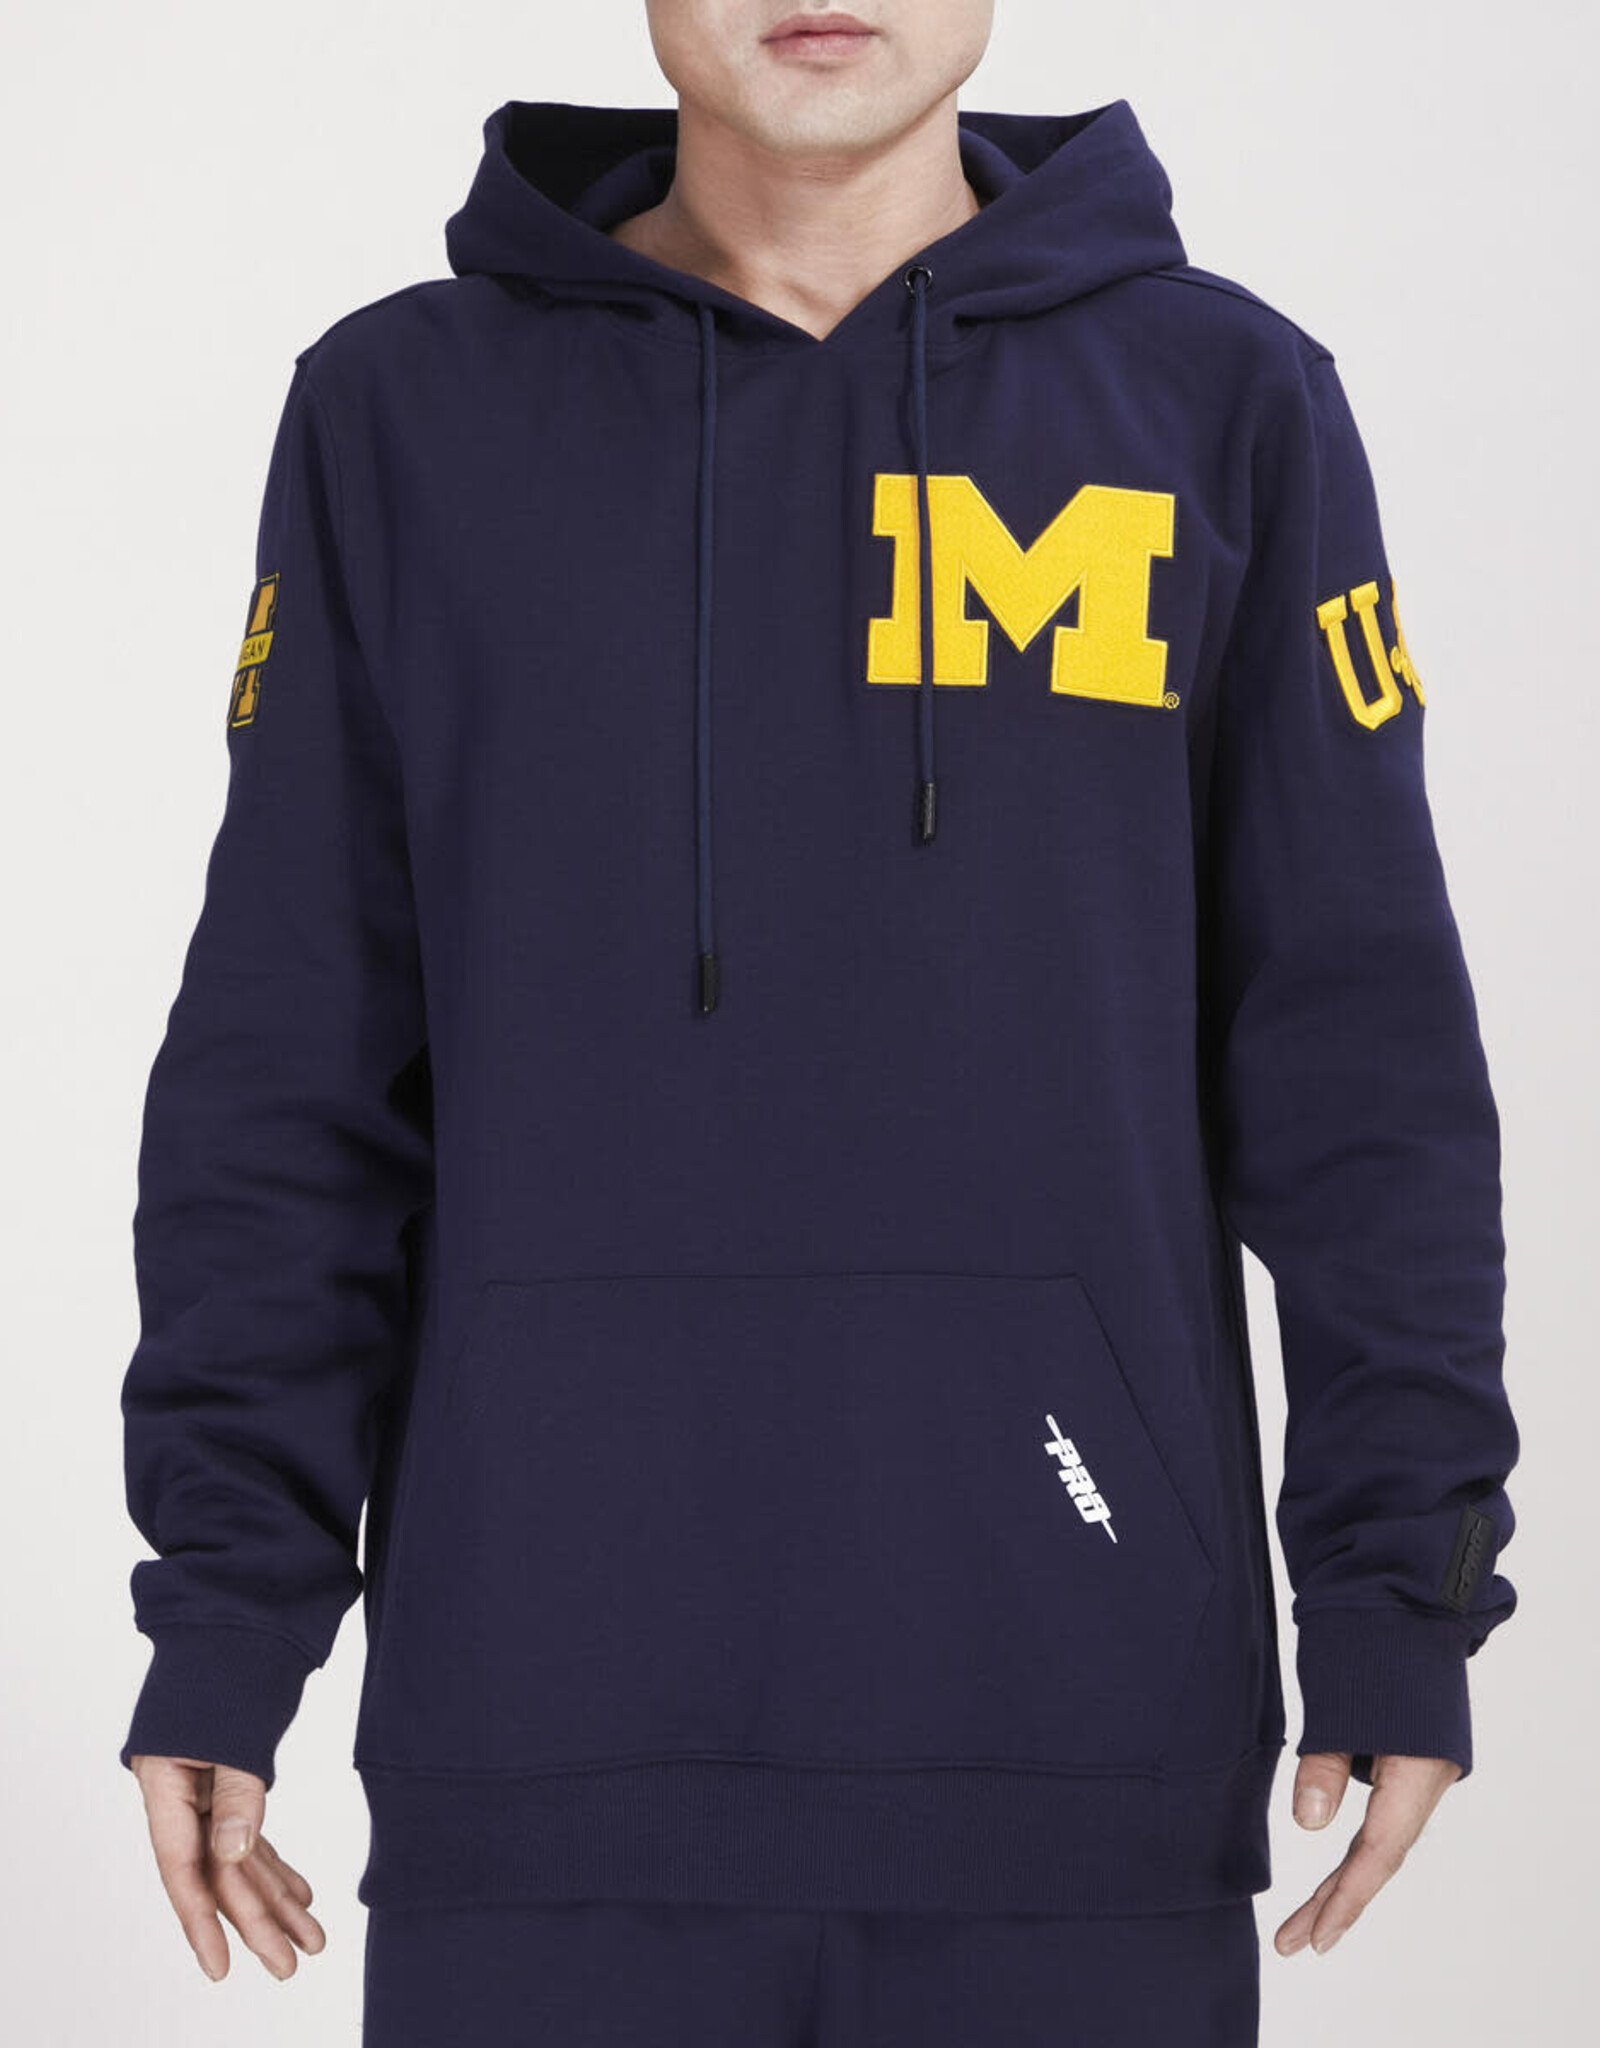 Pro Standard Michigan Wolverines Men's Classic Logo Pullover Hoodie - Navy